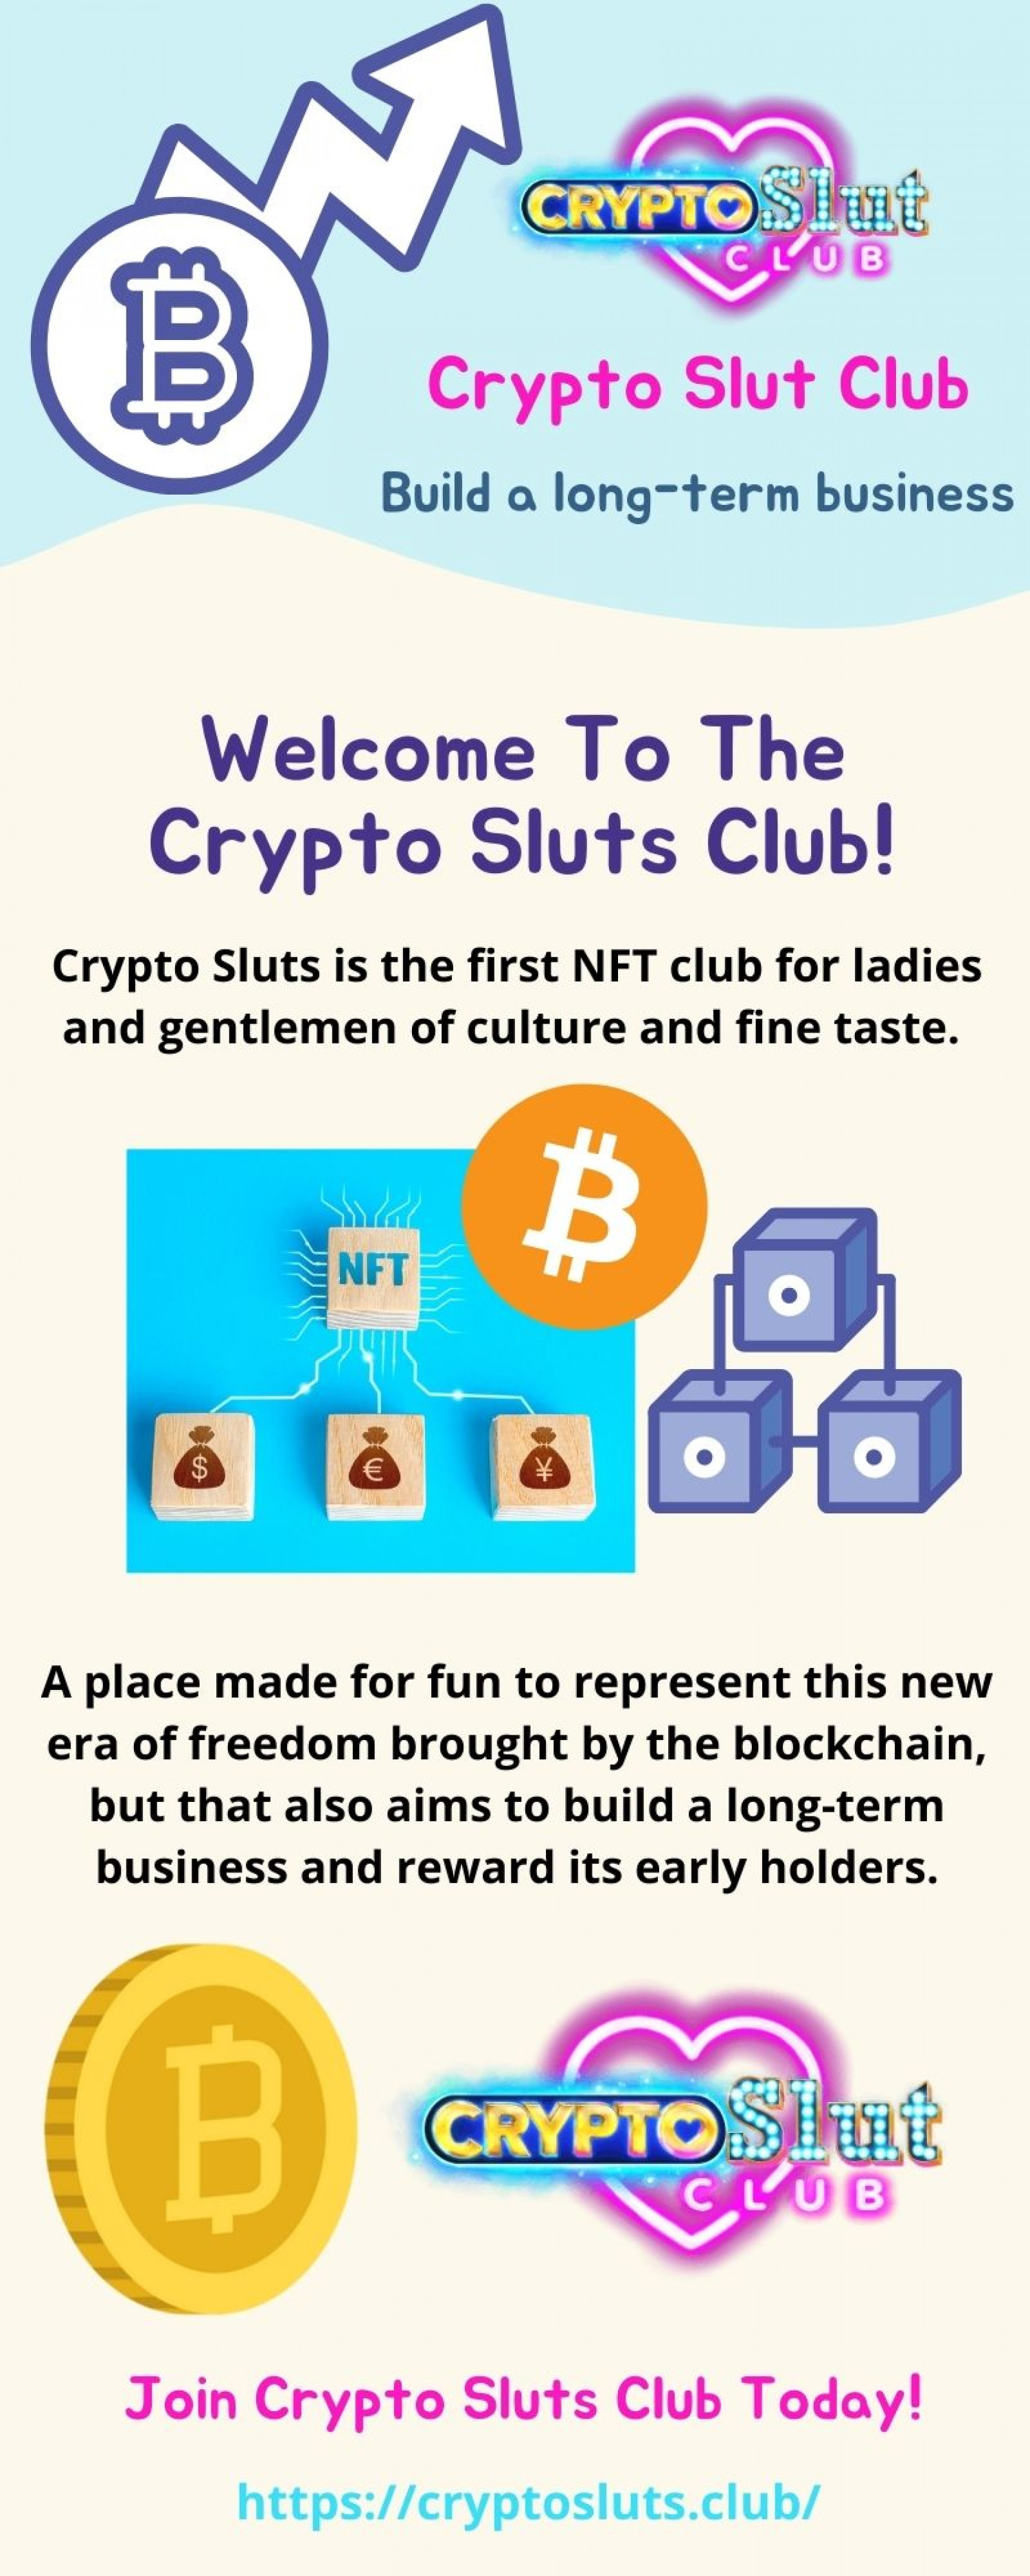 Crypto Slut Club Infographic